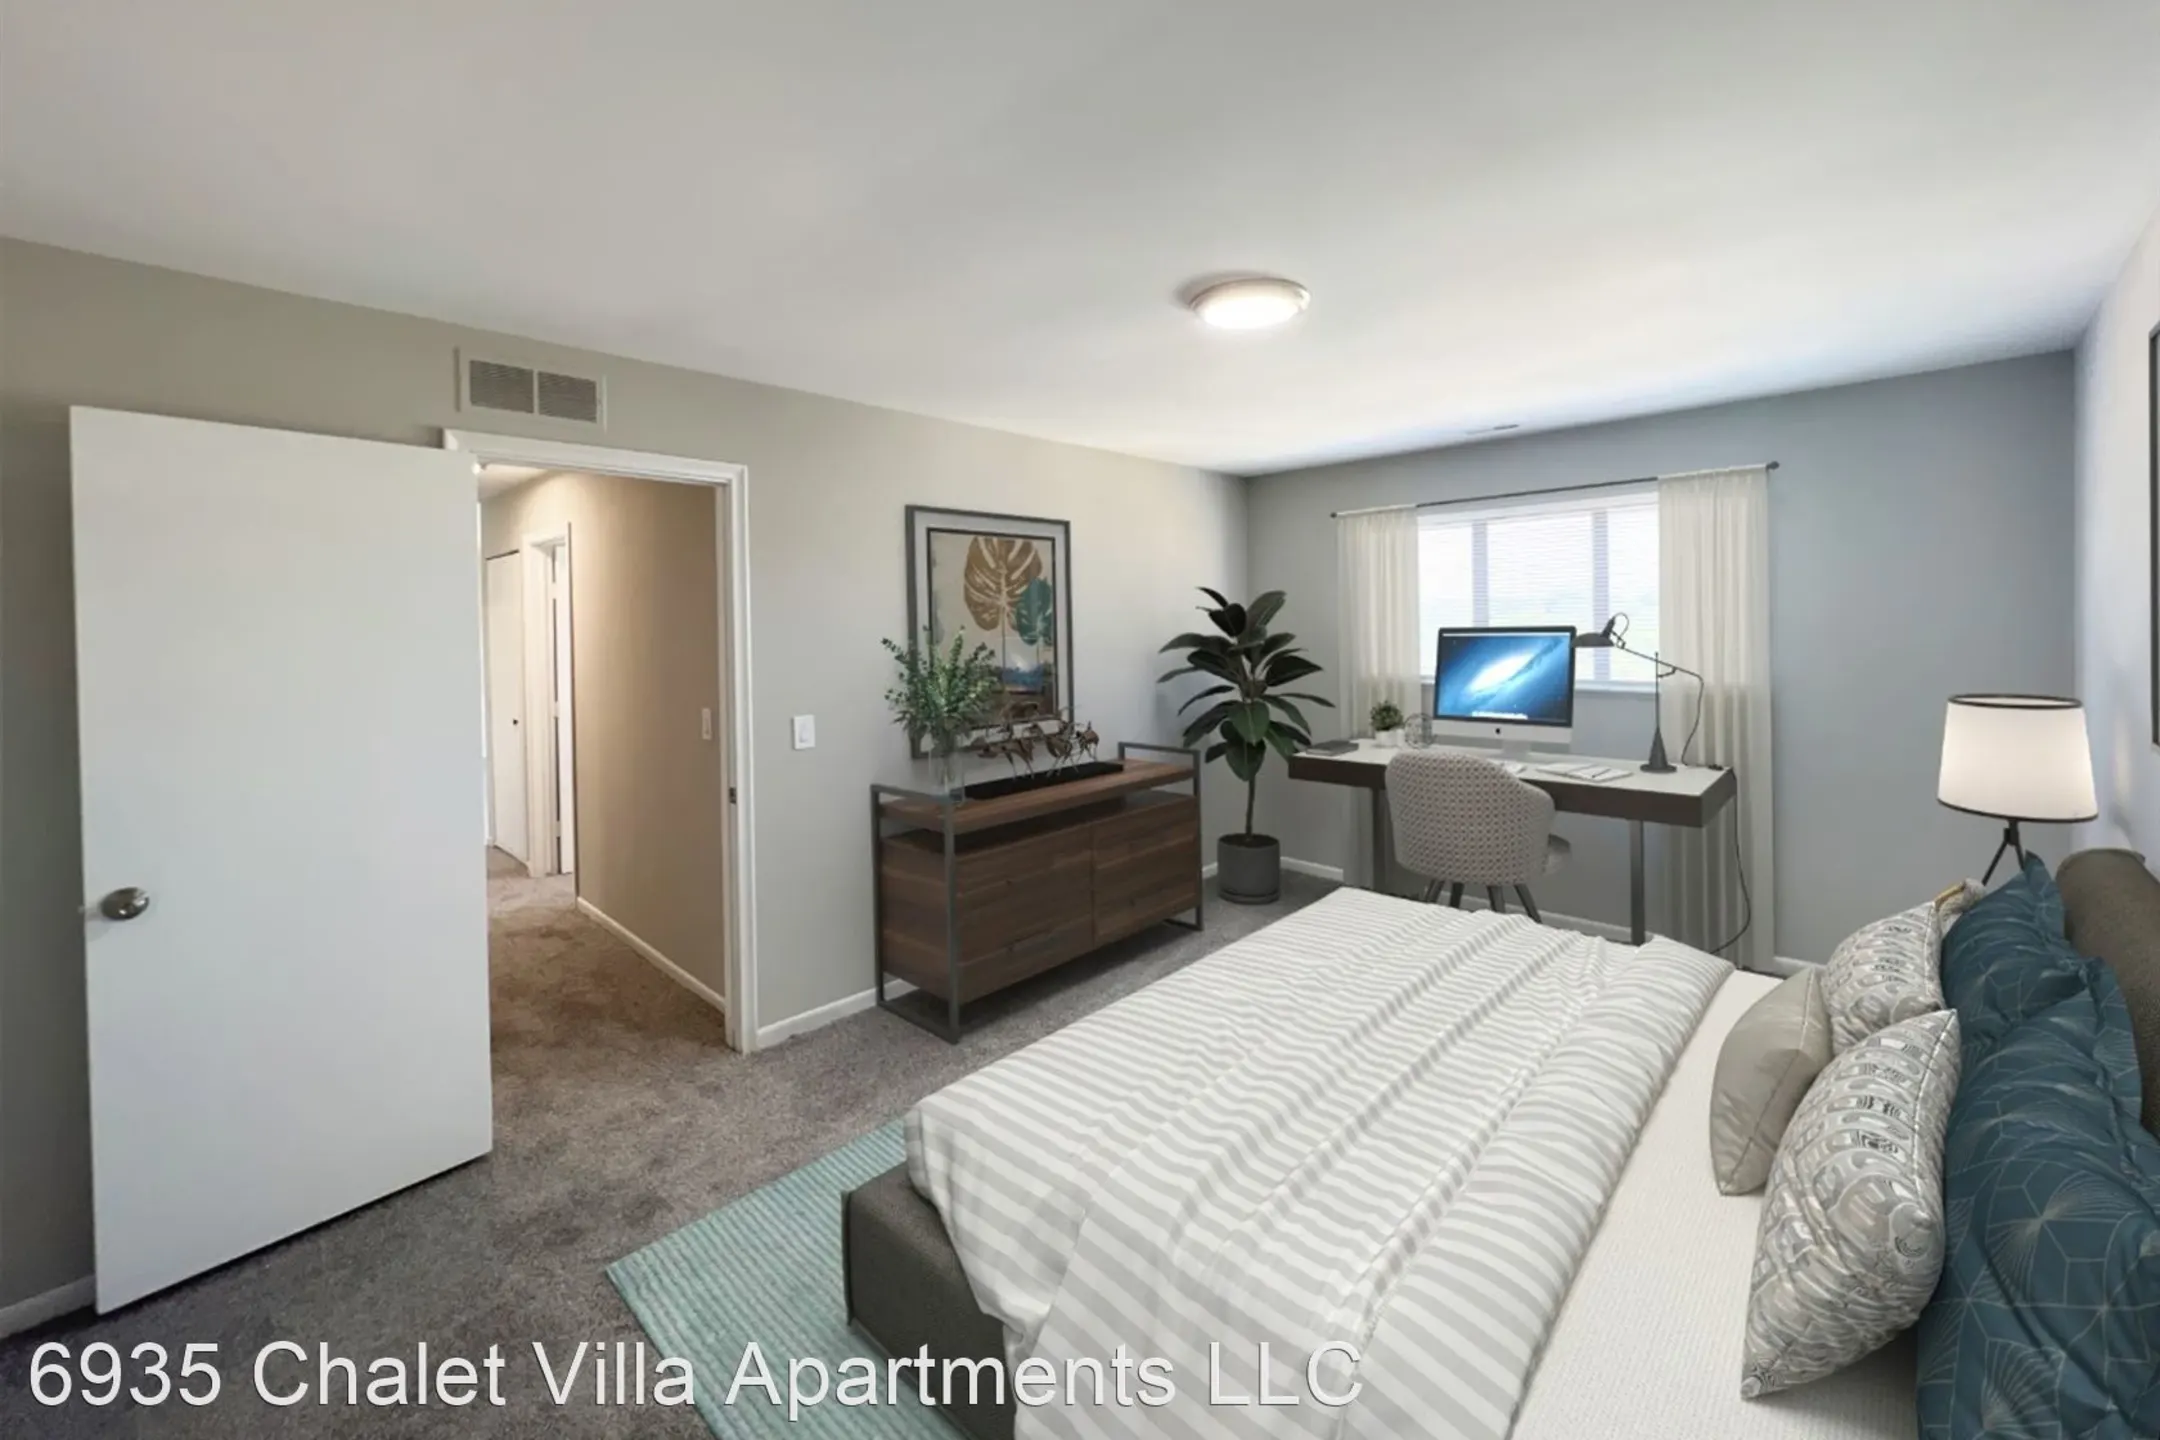 Bedroom - Chalet Villa Apartments - Clarkston, MI